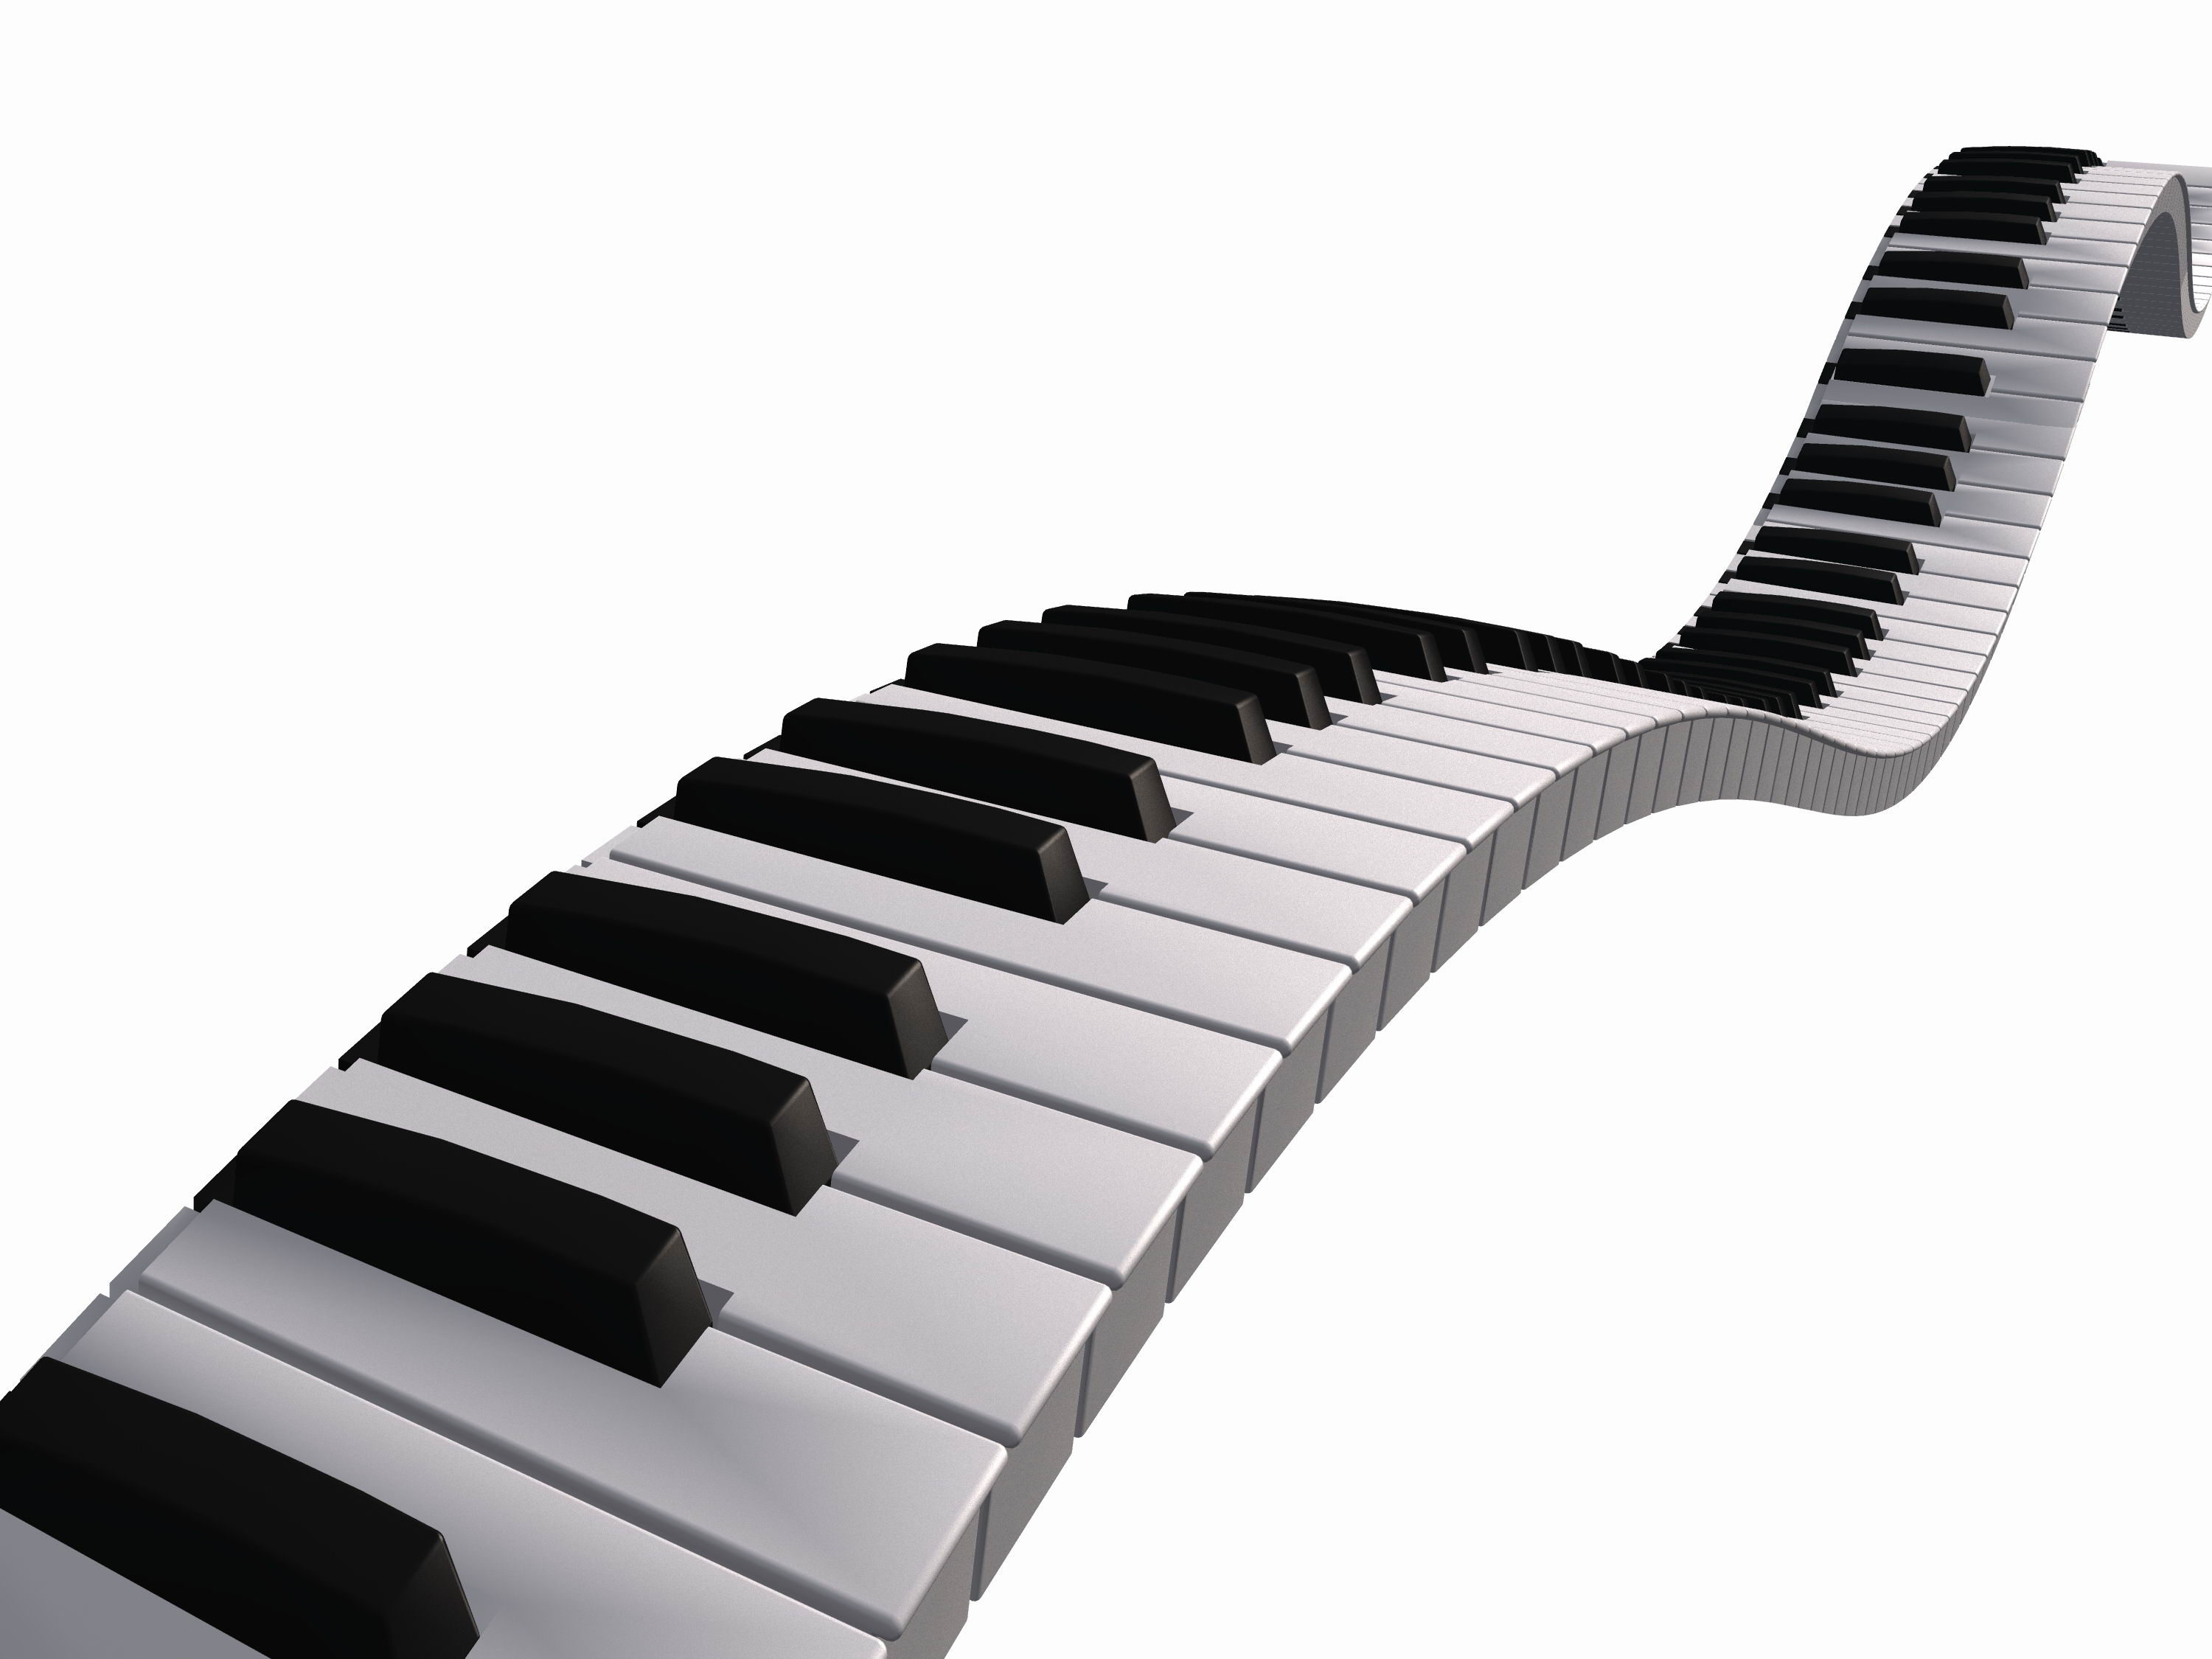 Free Piano Keys Clipart, Download Free Clip Art, Free Clip